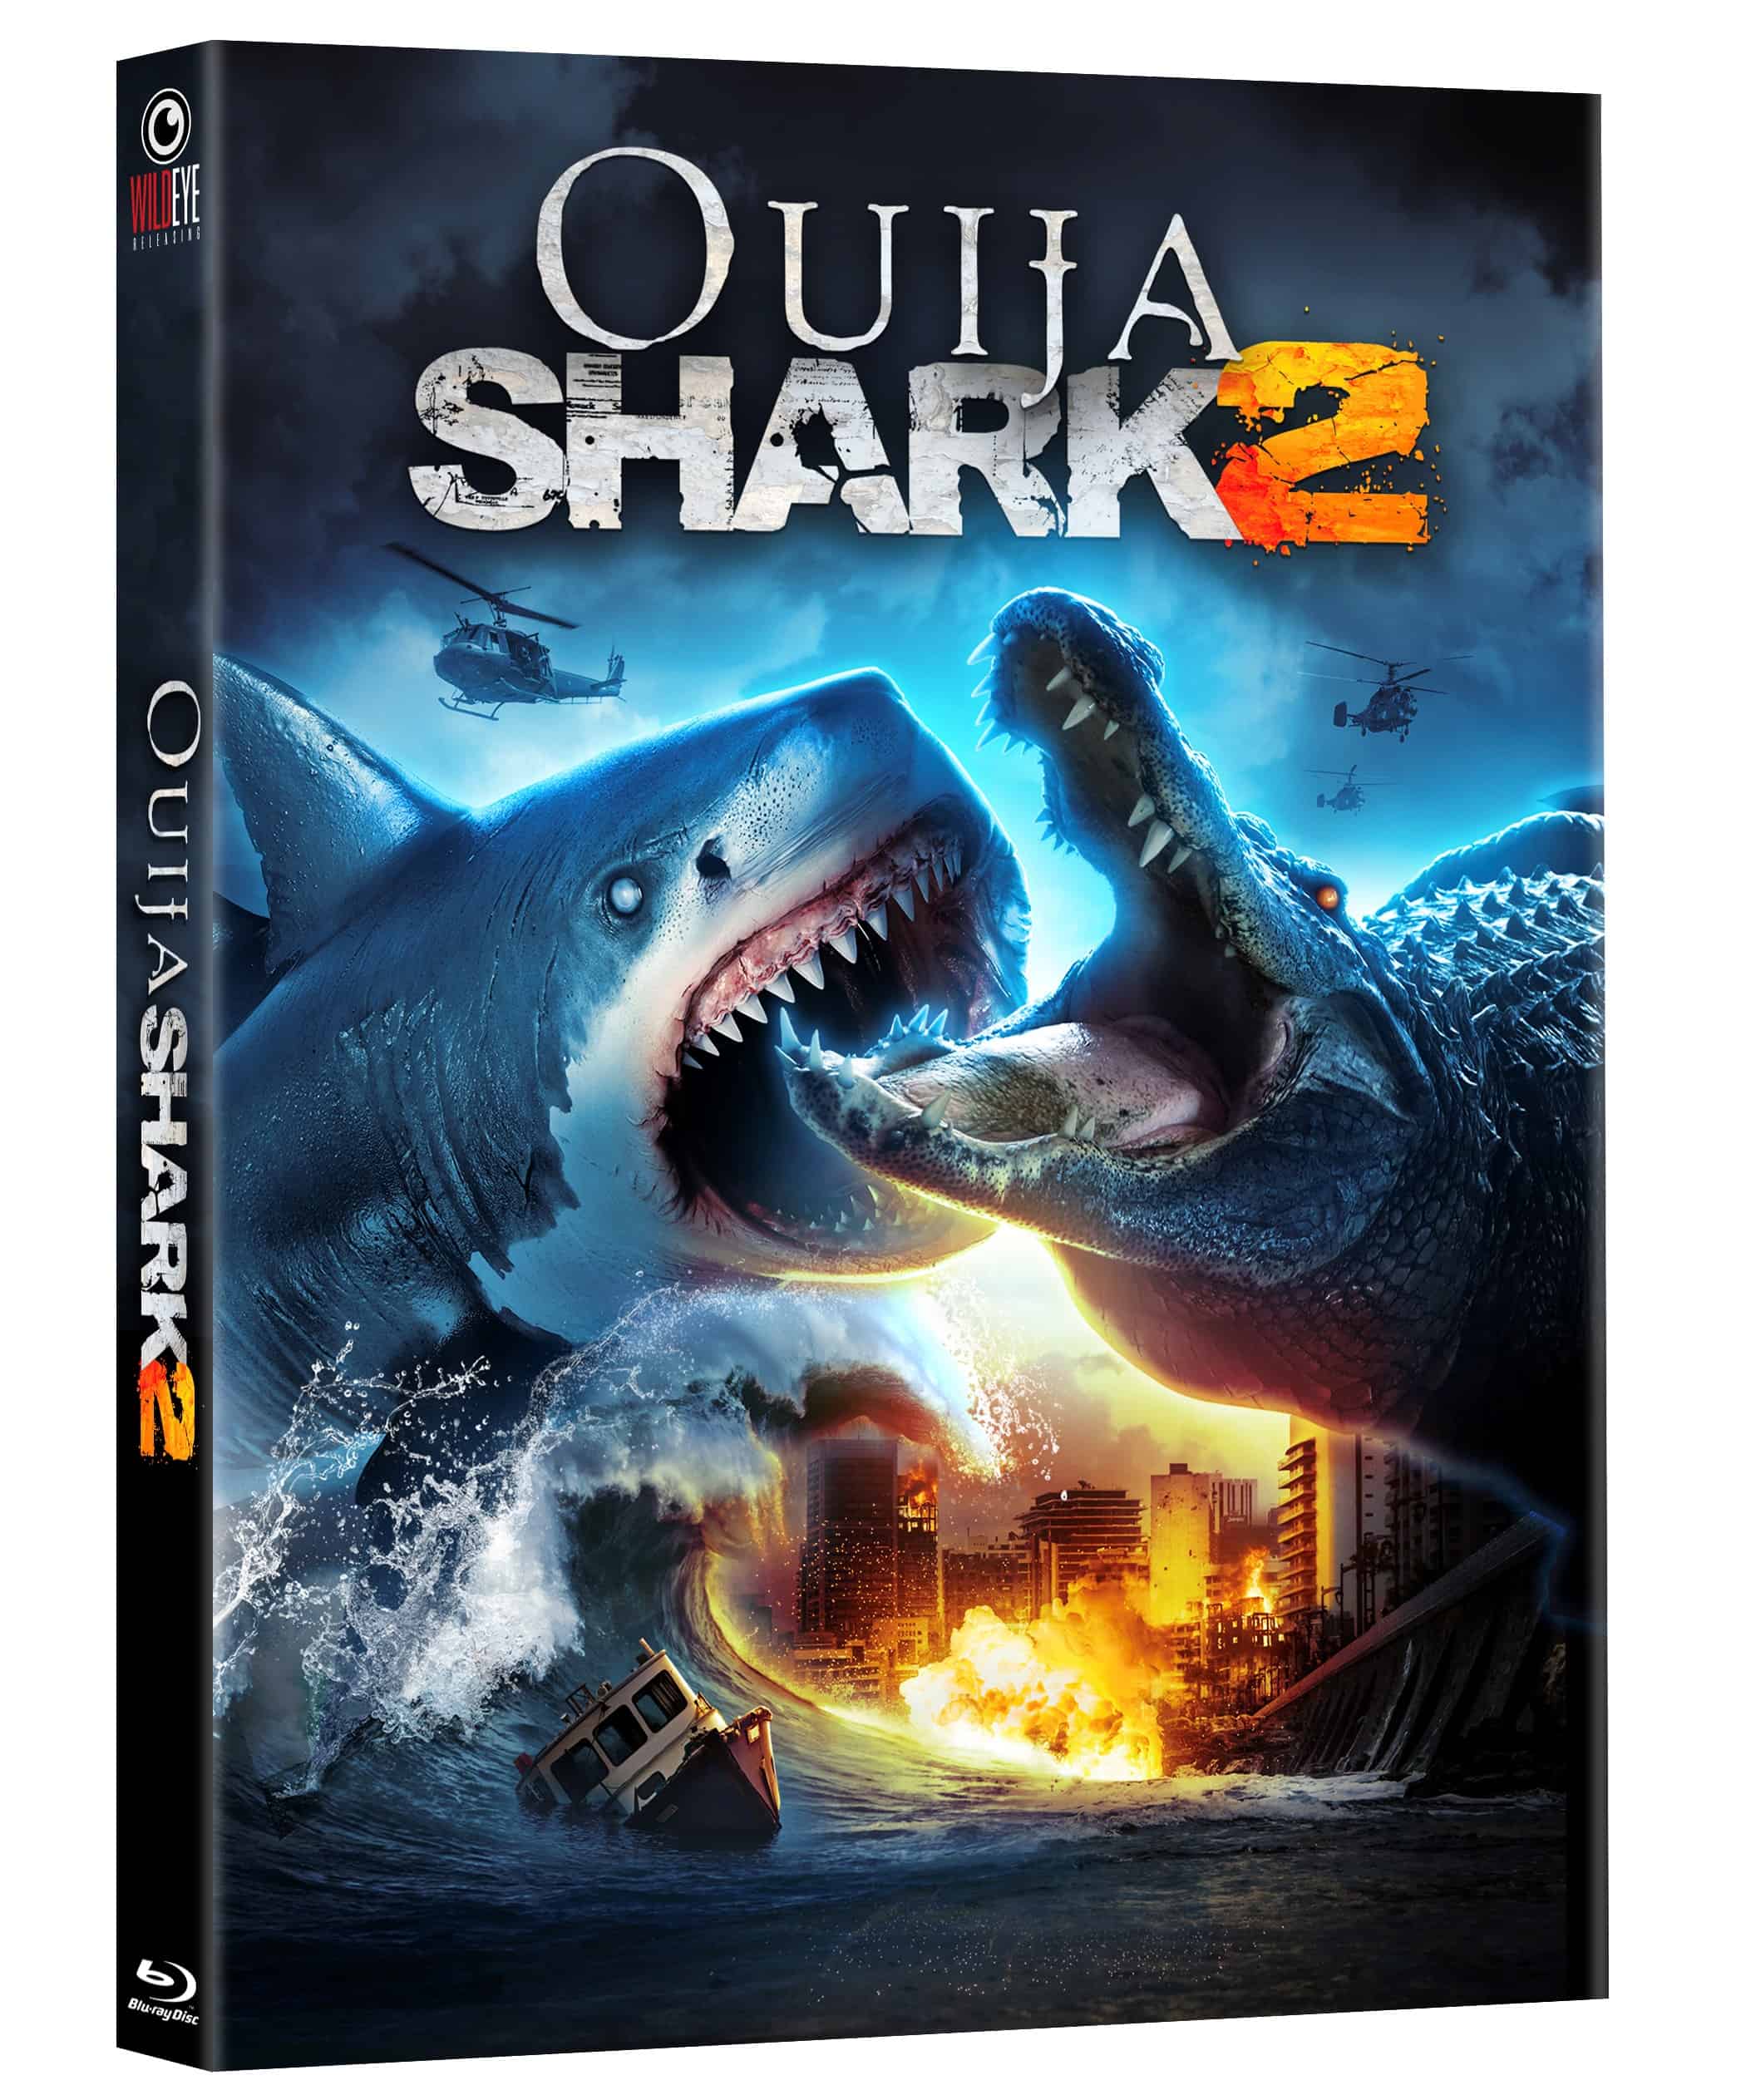 Wild Eye Releasing Announces Digital and Blu-Ray Release of Director John Migliore's OUIJA SHARK 2 1